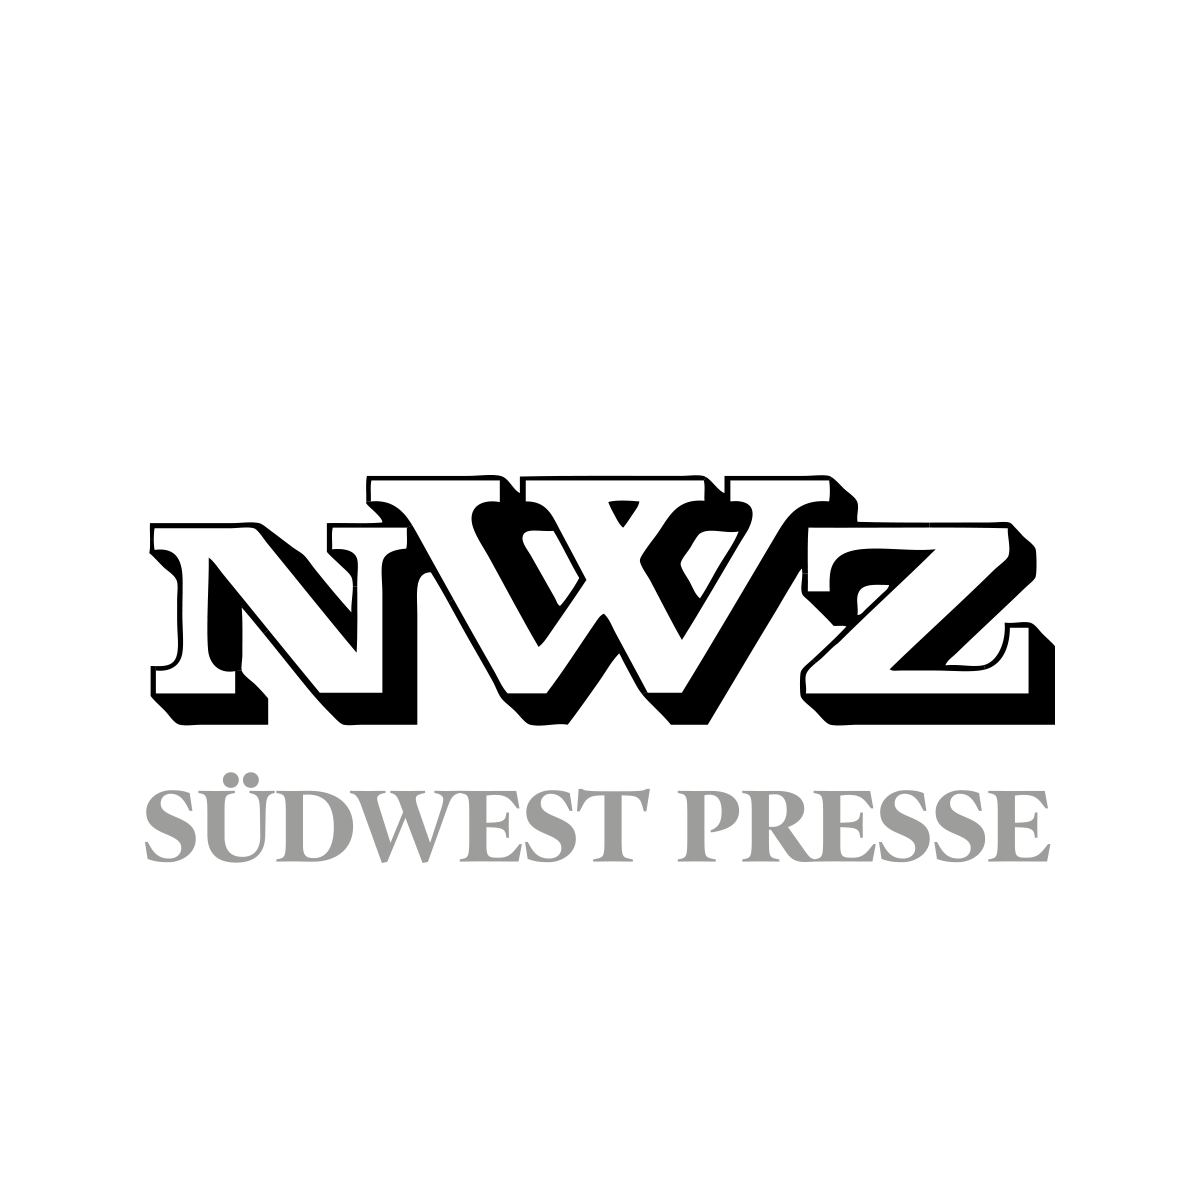 NWZ Südwest Presse - official logo